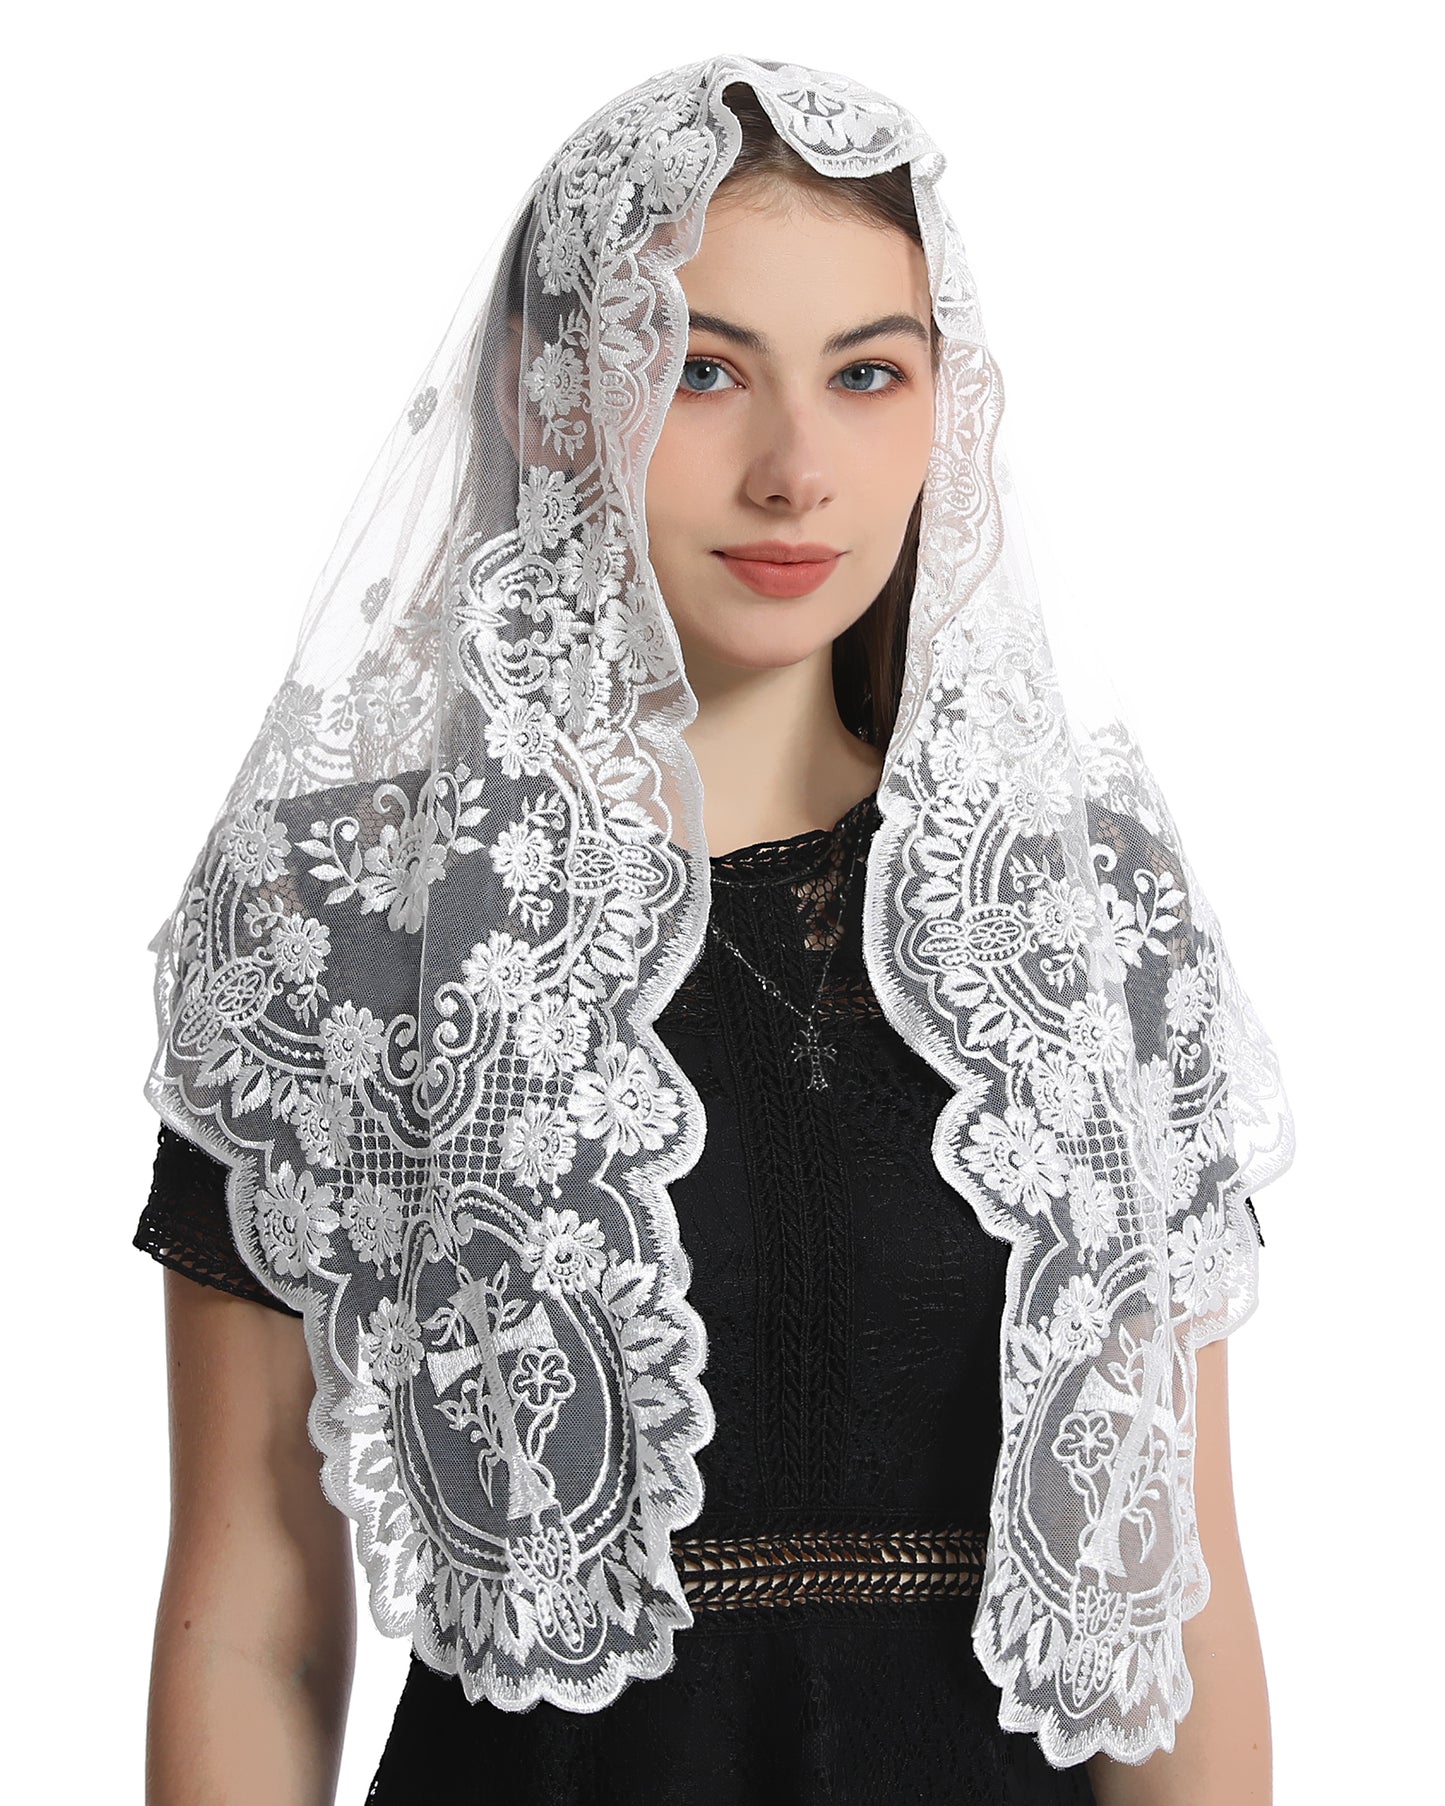 Bozidol Church Triangular Head covering - Cross Chalice Embroidered Vintage Church Veil for Women